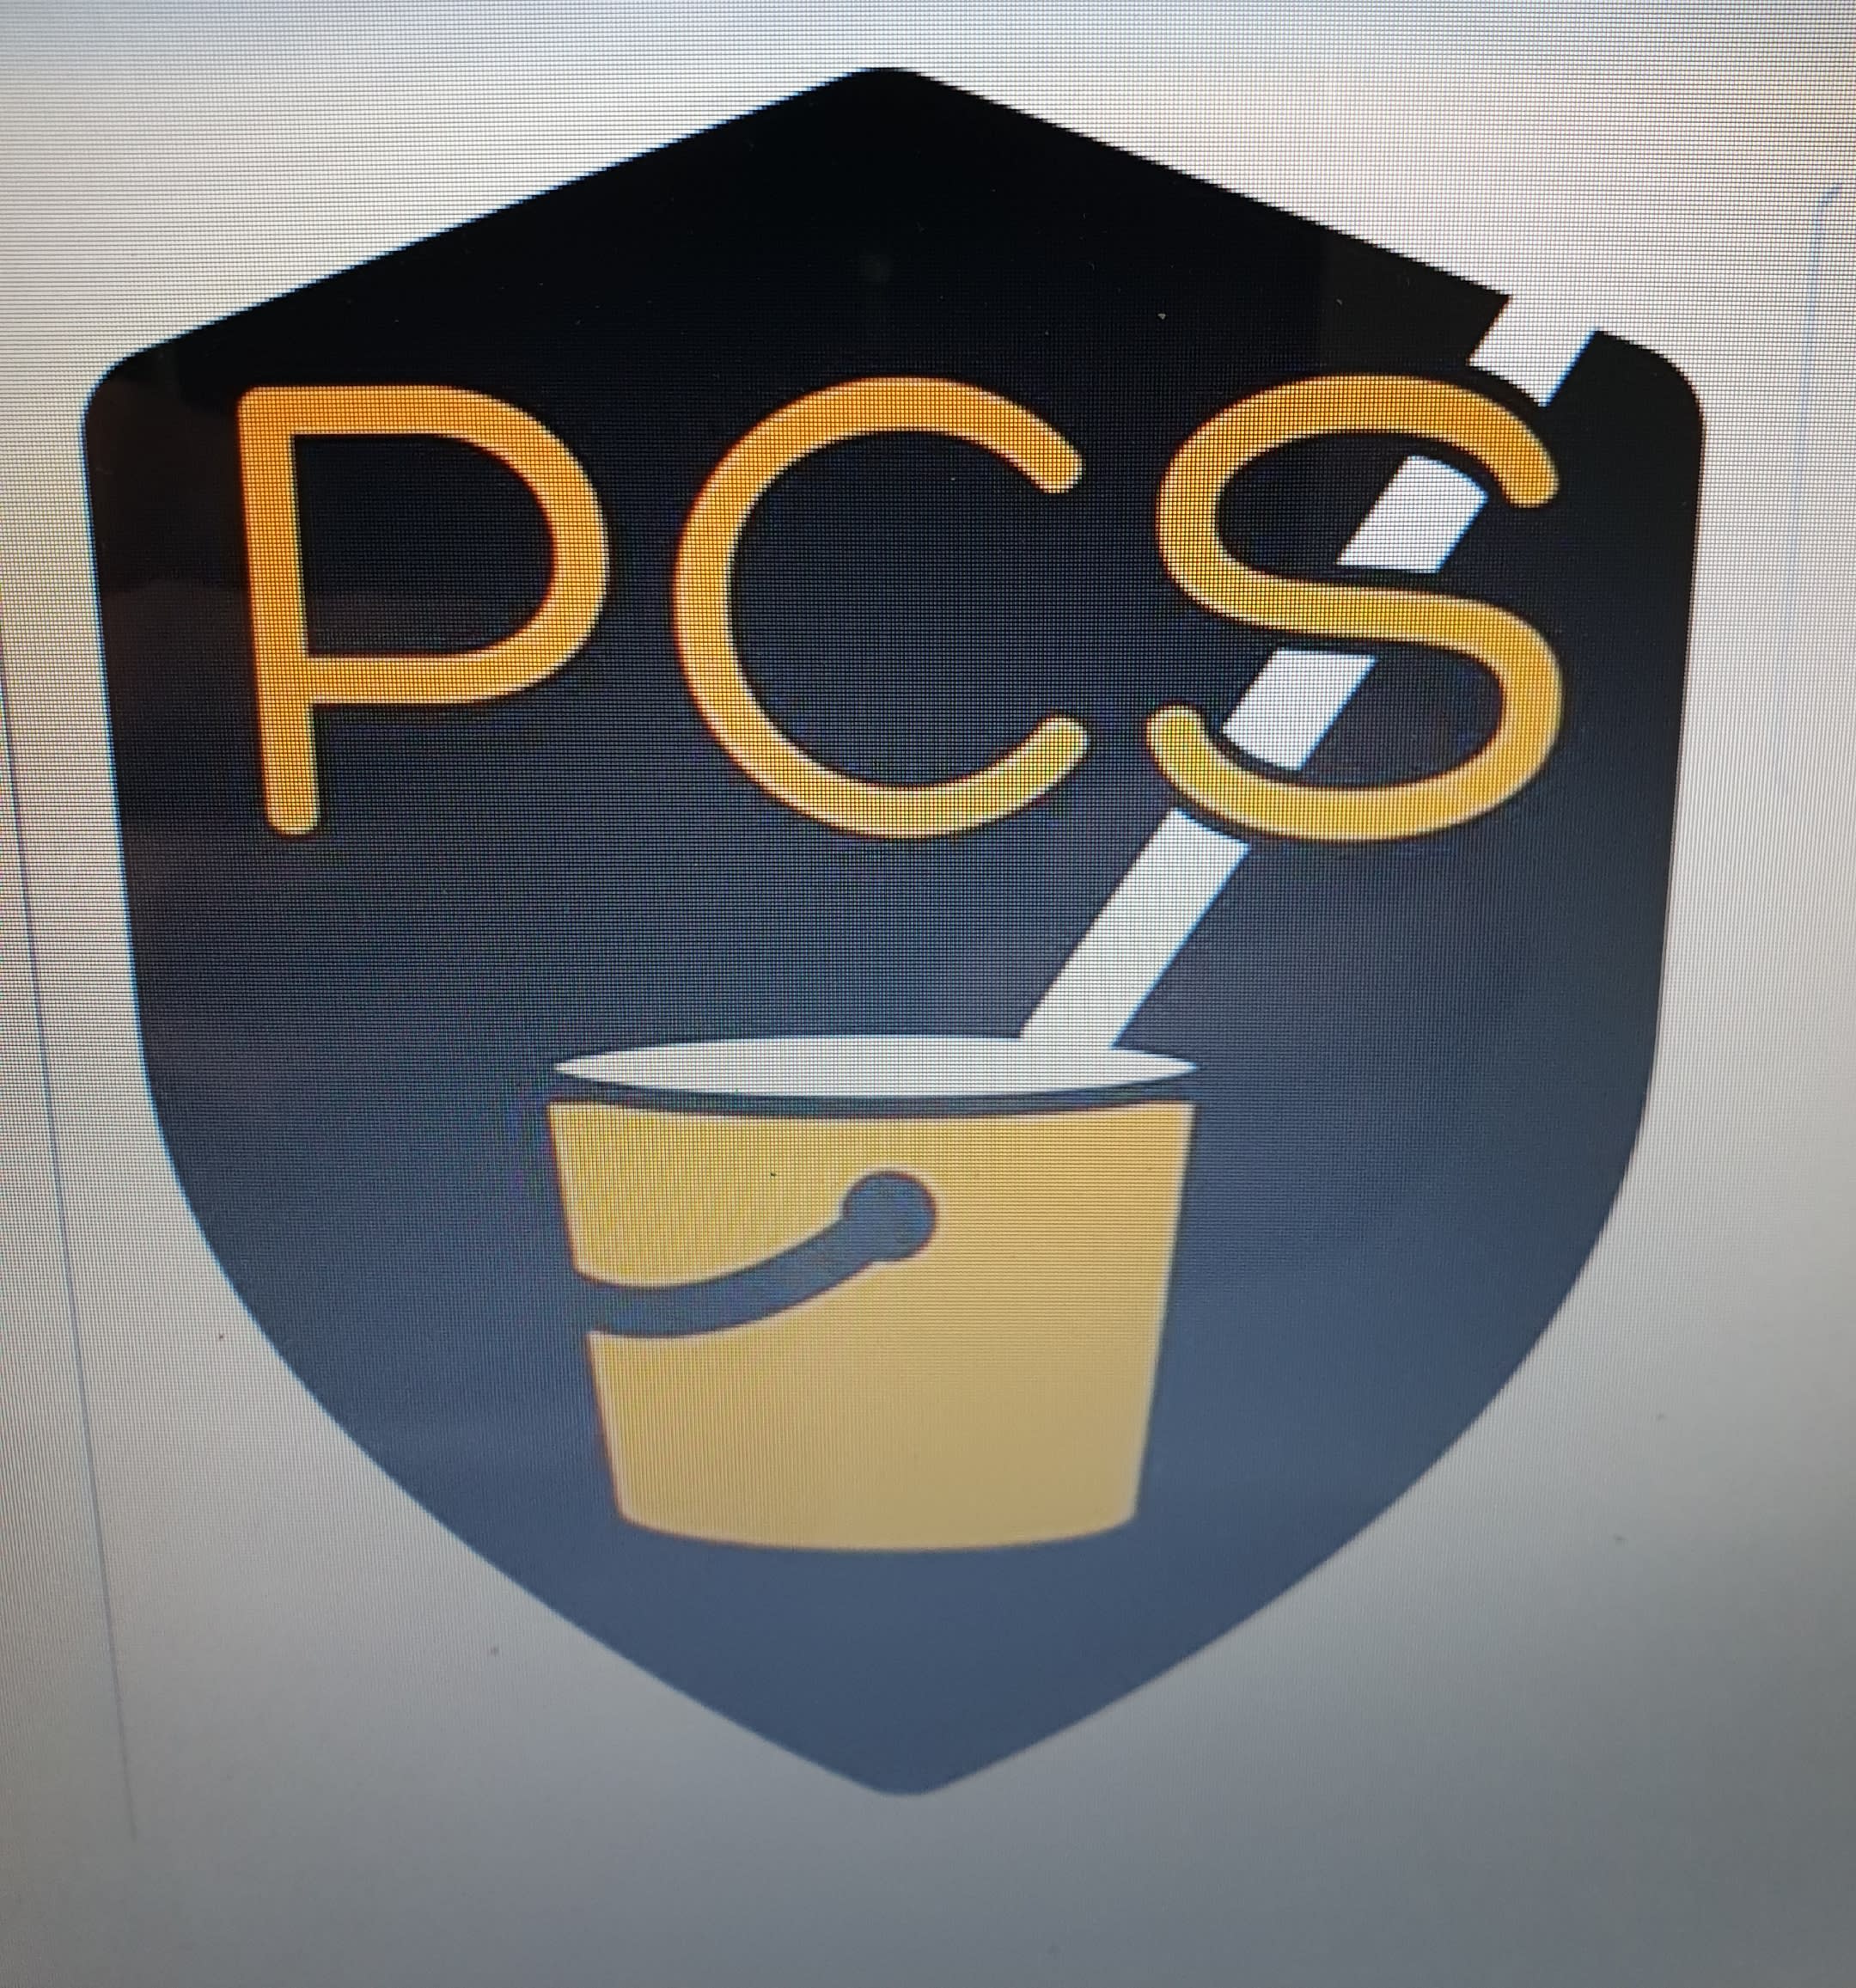 PCS Manchester Limited